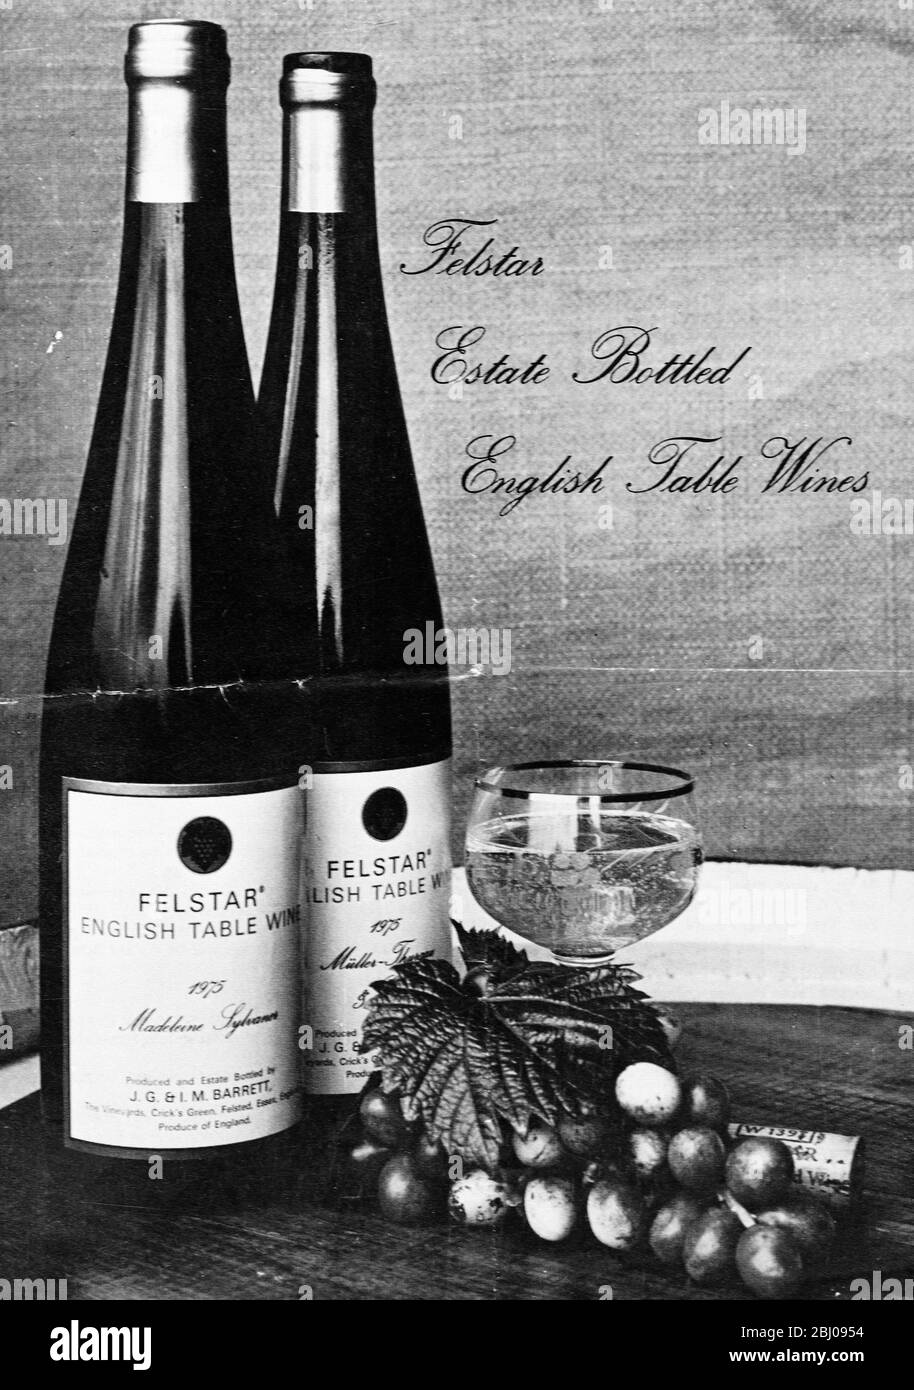 Felstar Estate Bottled English Table Wine. Produced by J.G. & I.M. Barrett at Cricks Green, Felsted, Essex. Stock Photo